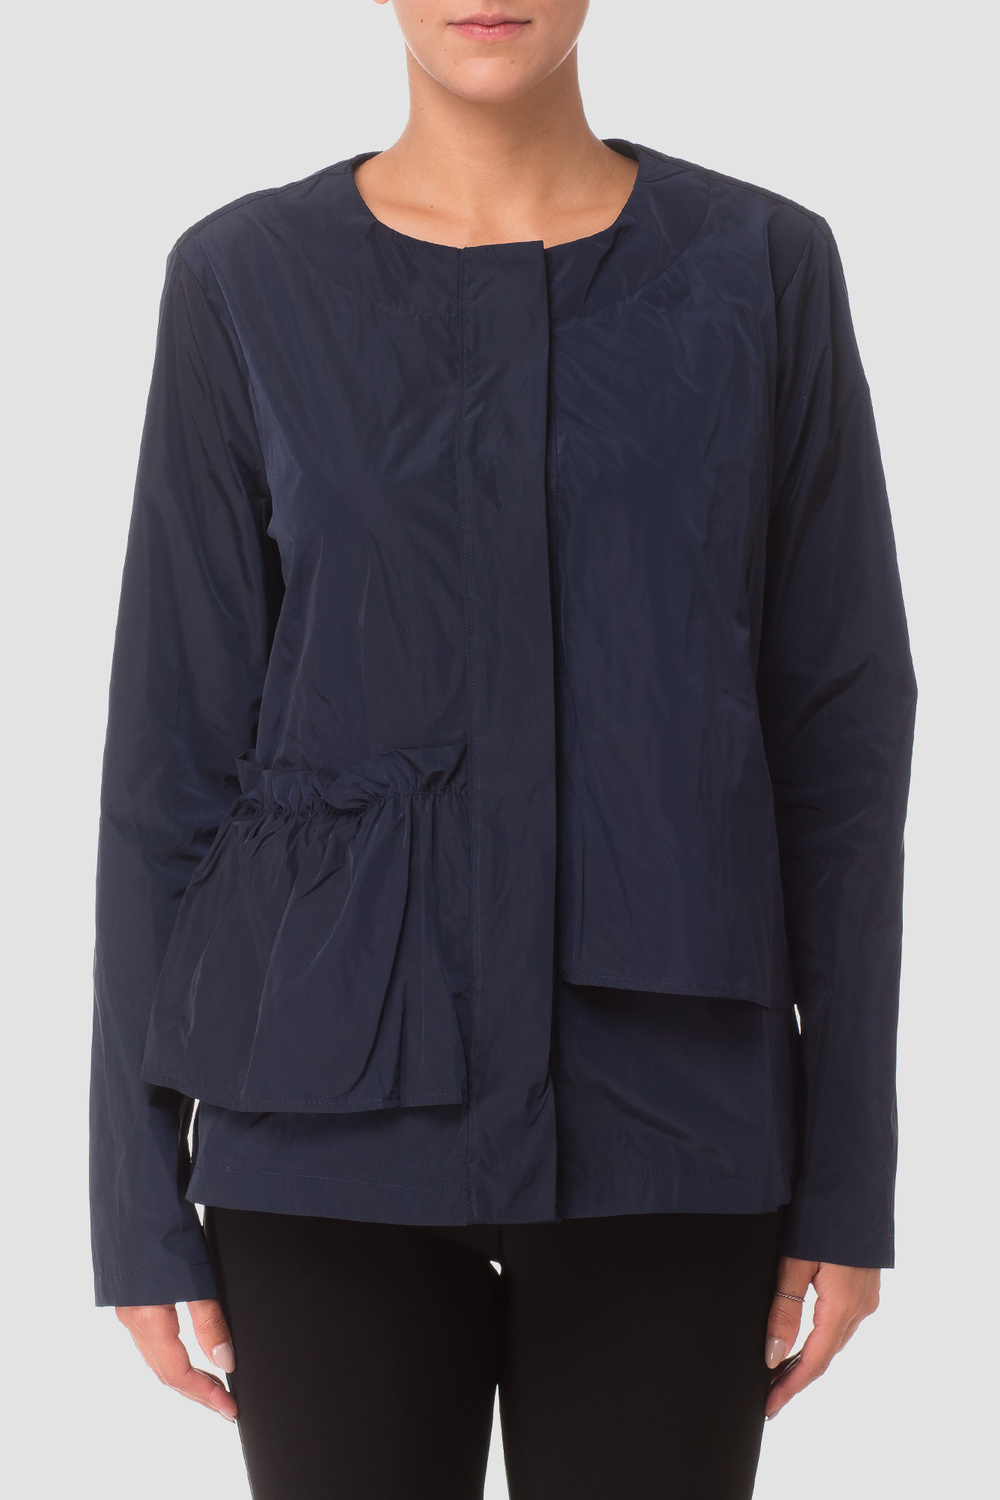 Joseph Ribkoff jacket style 181576. Midnight Blue 40